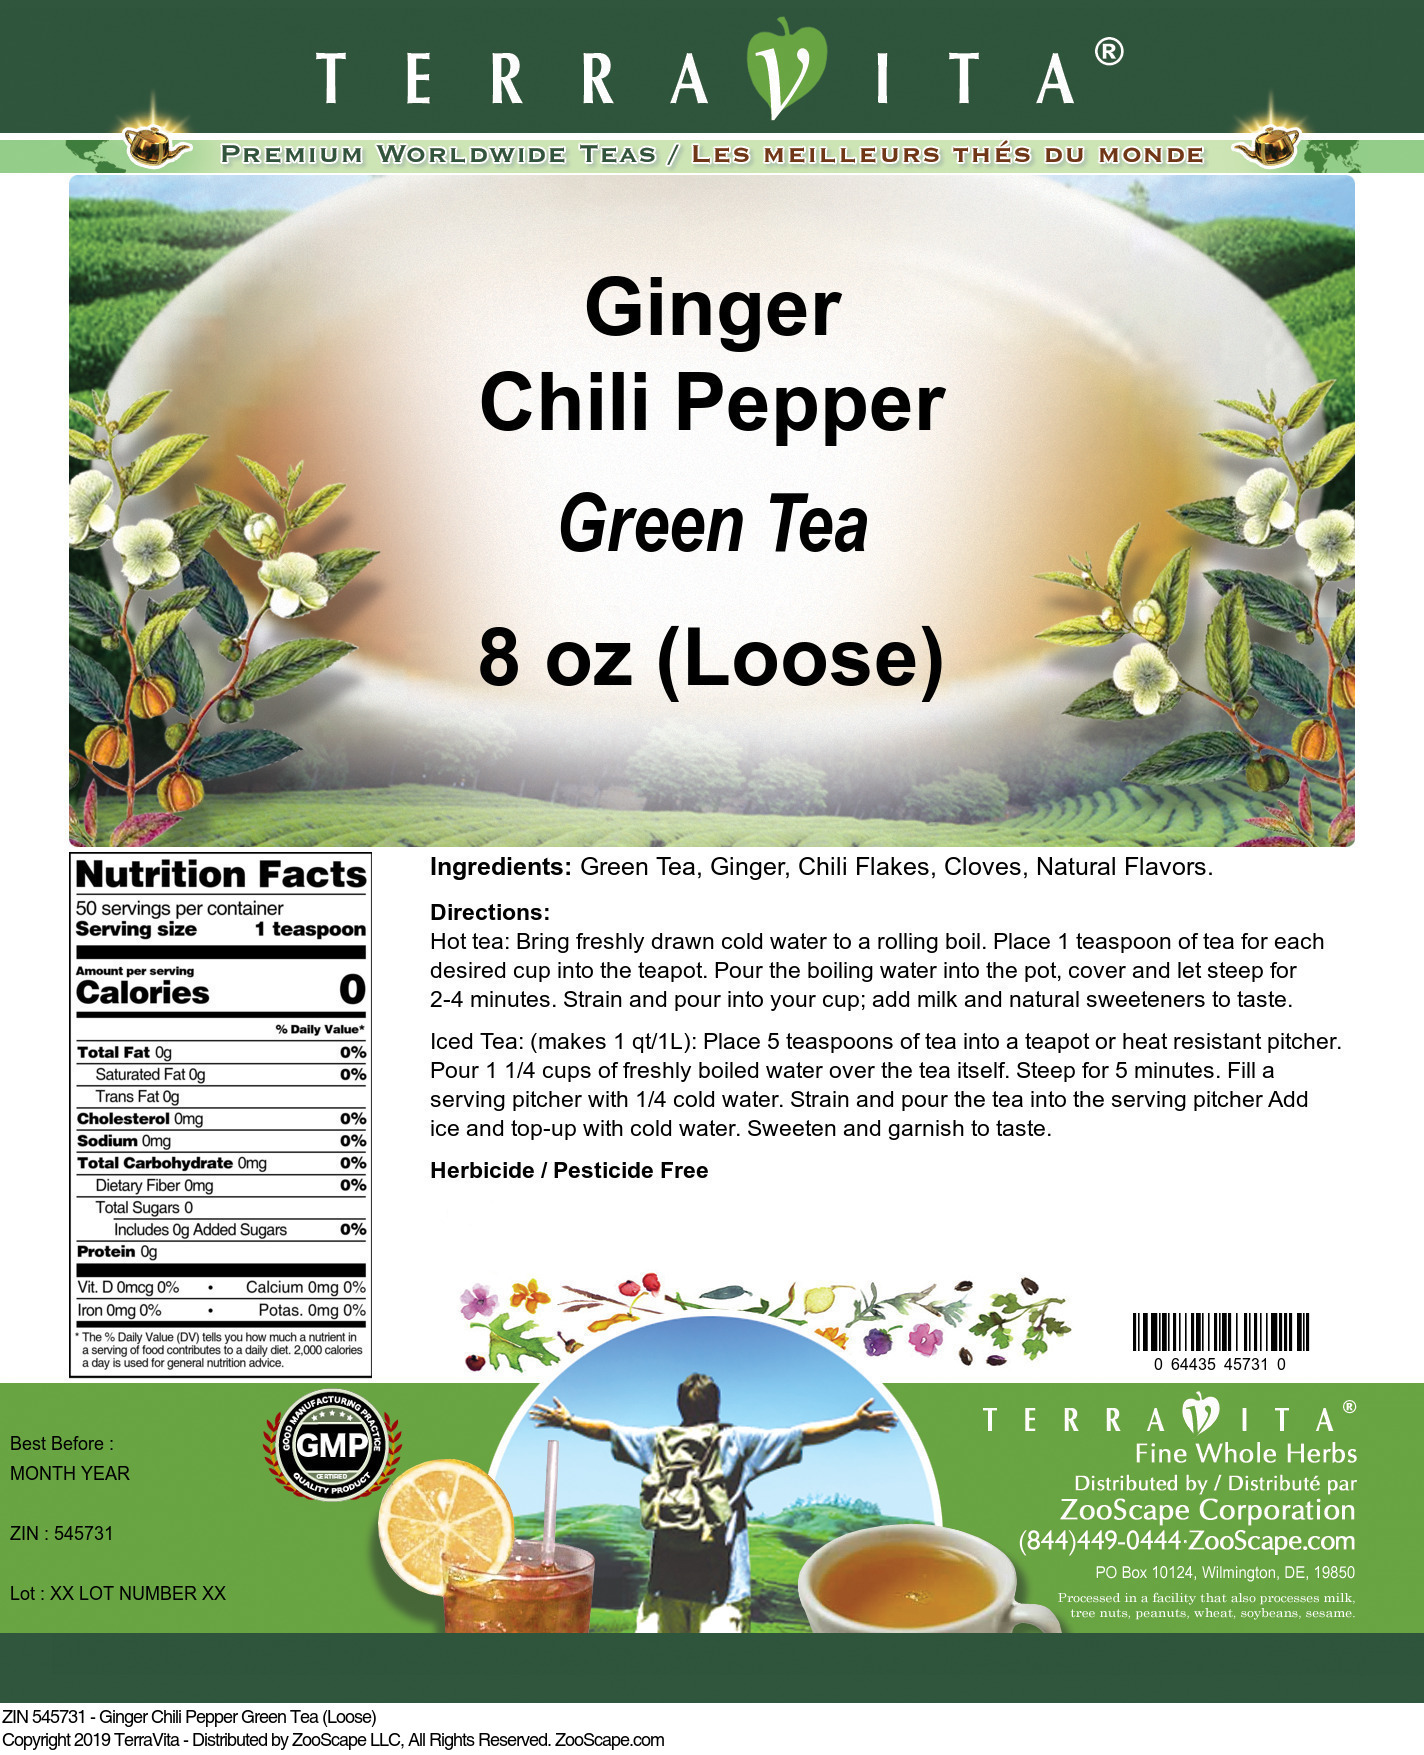 Ginger Chili Pepper Green Tea (Loose) - Label